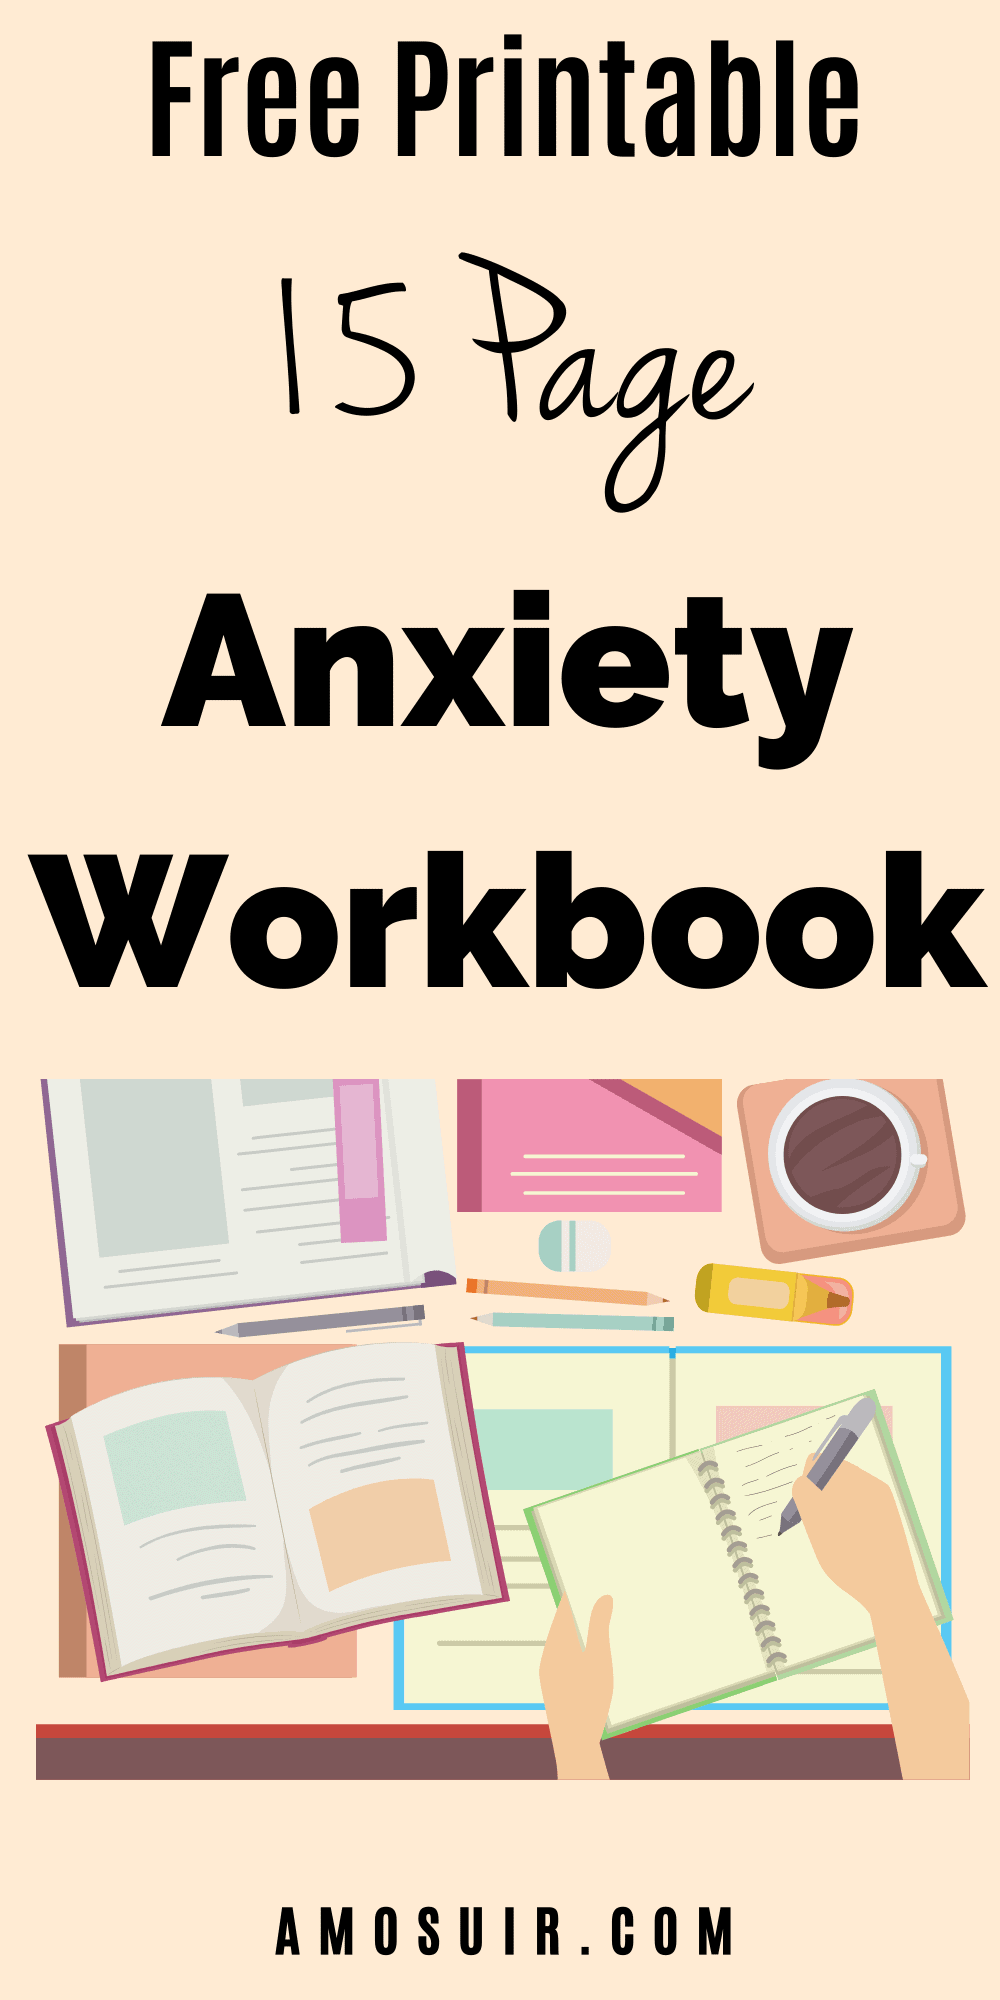 Download Your Free Printable Anxiety Workbook (PDF) | Amosuir